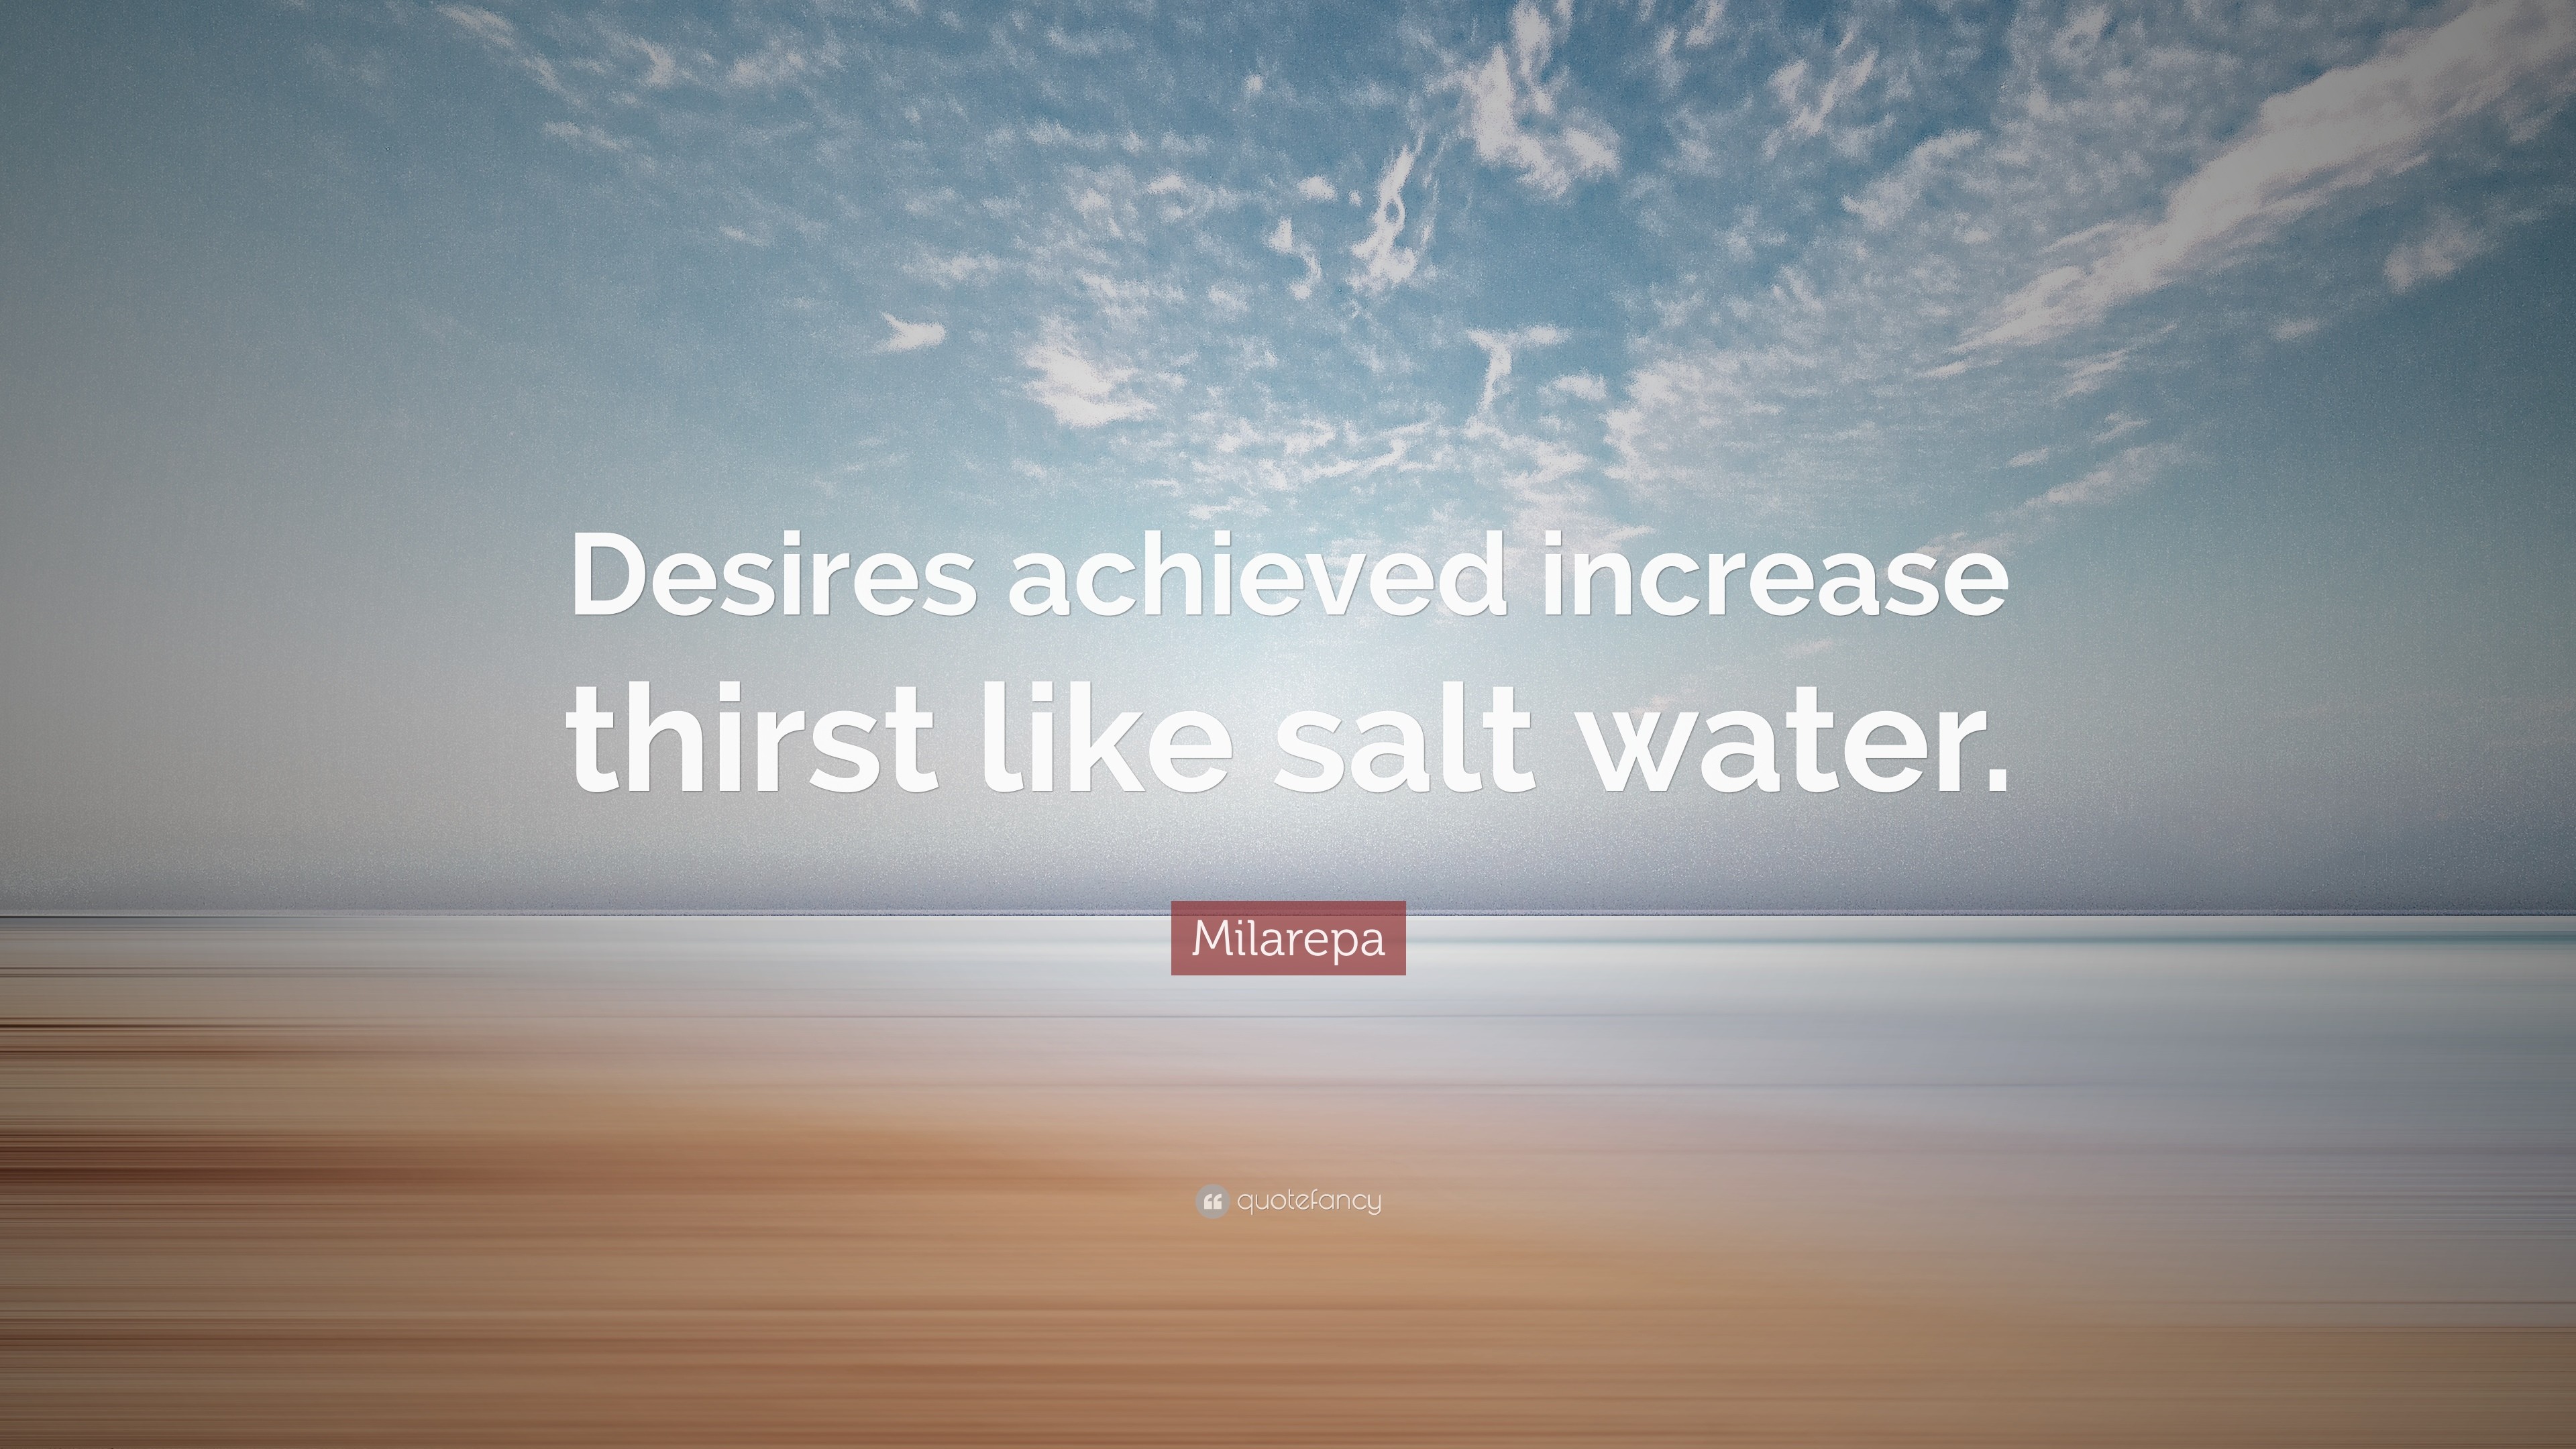 3840x2160 Milarepa Quote: “Desires achieved increase thirst like salt water.”